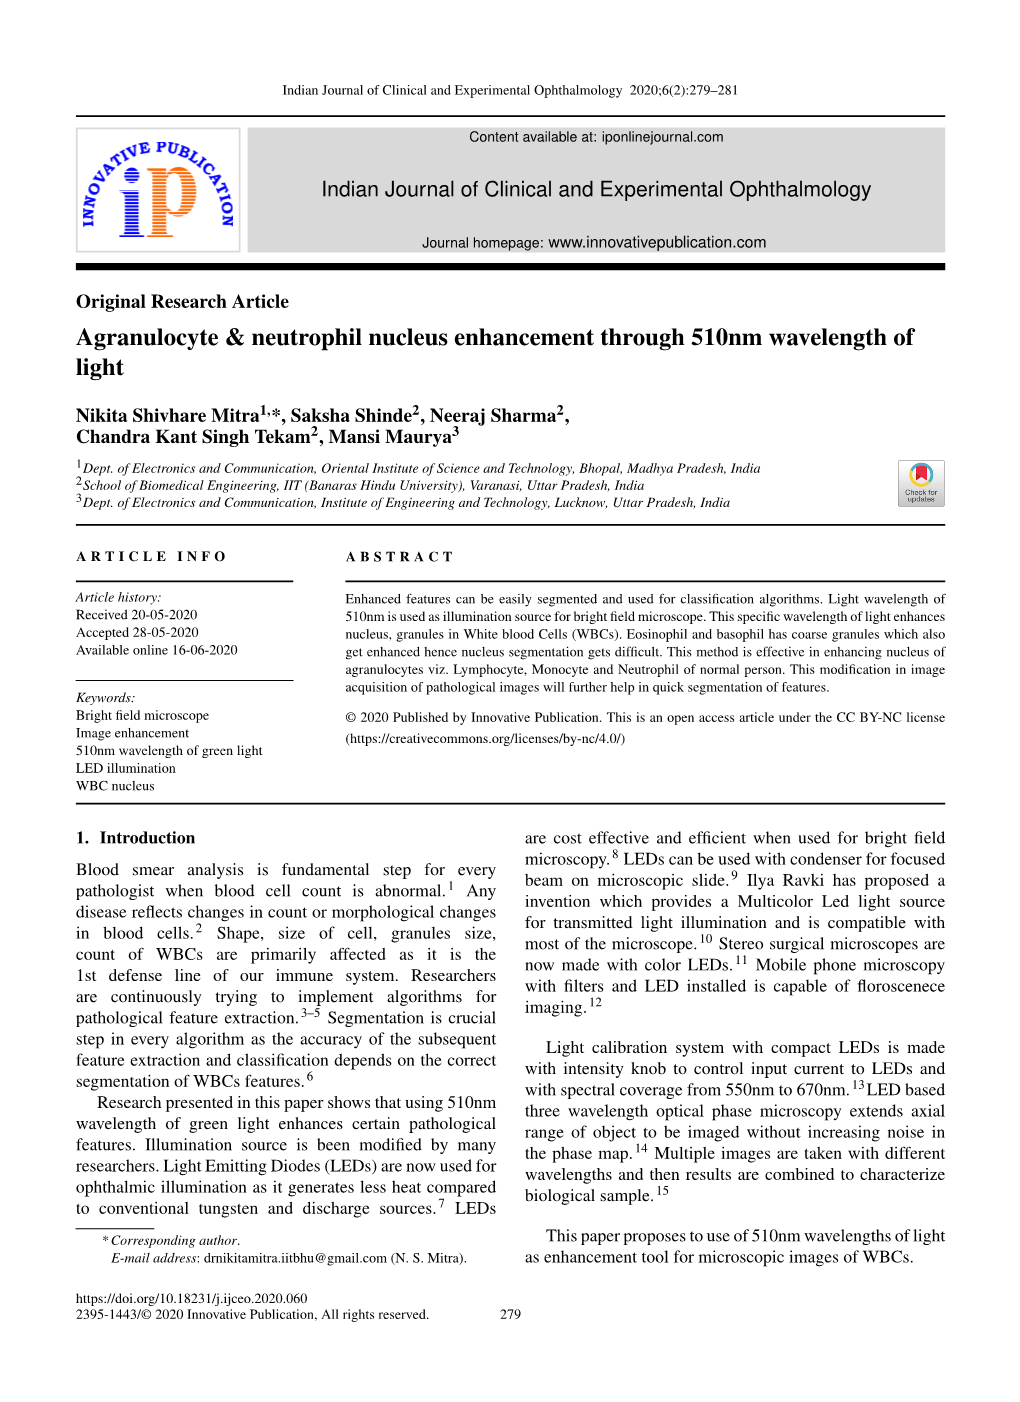 Agranulocyte & Neutrophil Nucleus Enhancement Through 510Nm